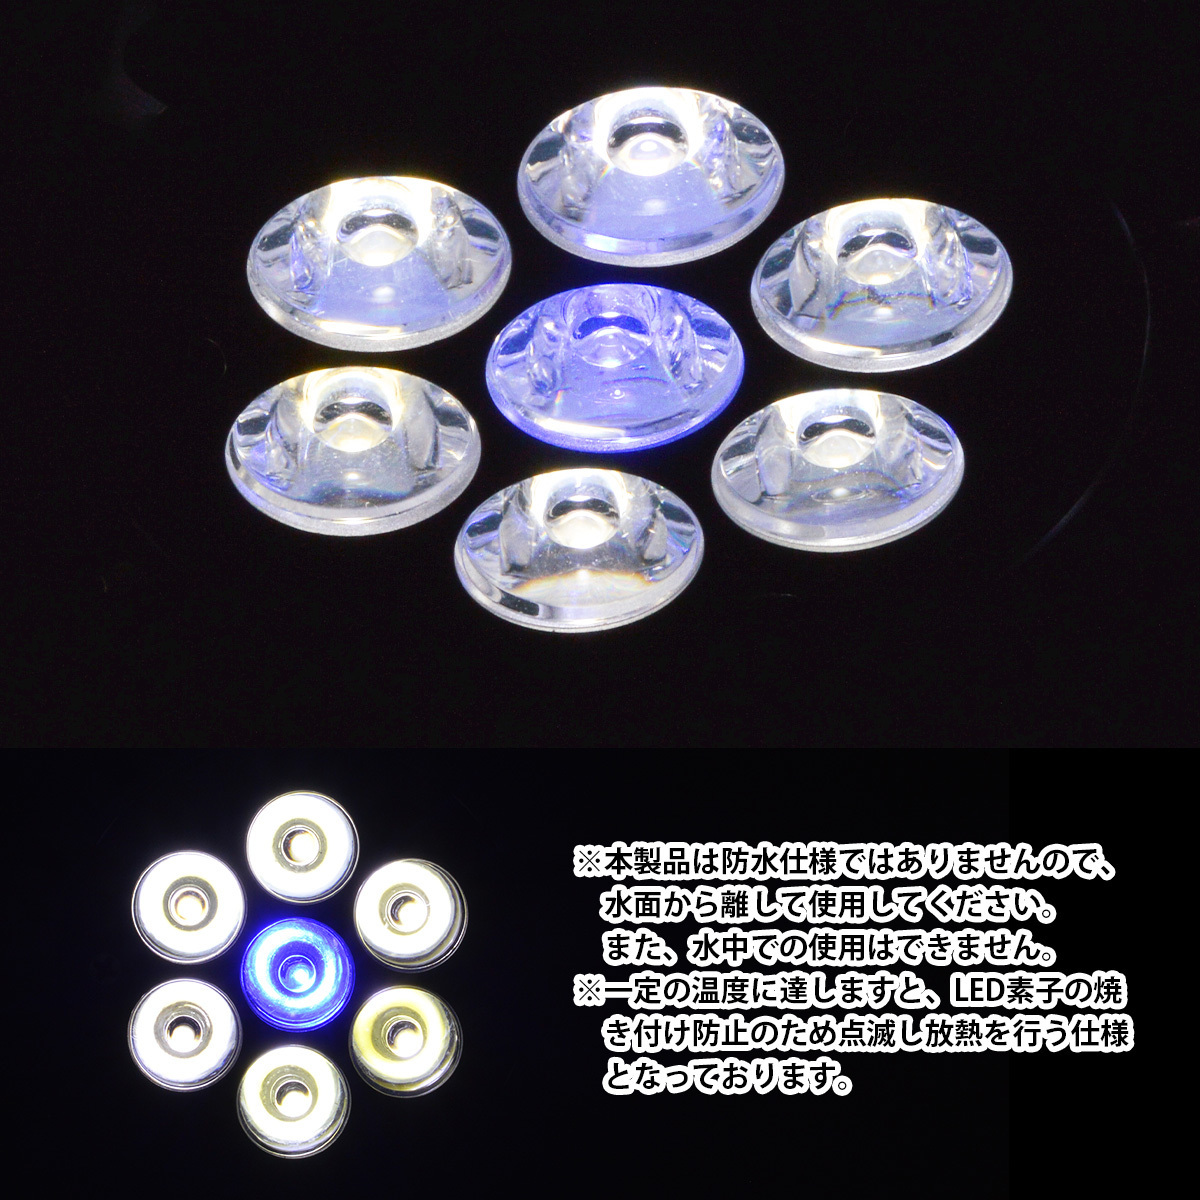 LED 電球 スポットライト 7W 白6青1 水槽 照明 E26 観賞育成用 LEDスポットライト 電気 水草 サンゴ 熱帯魚 観賞魚 植物育成_画像4